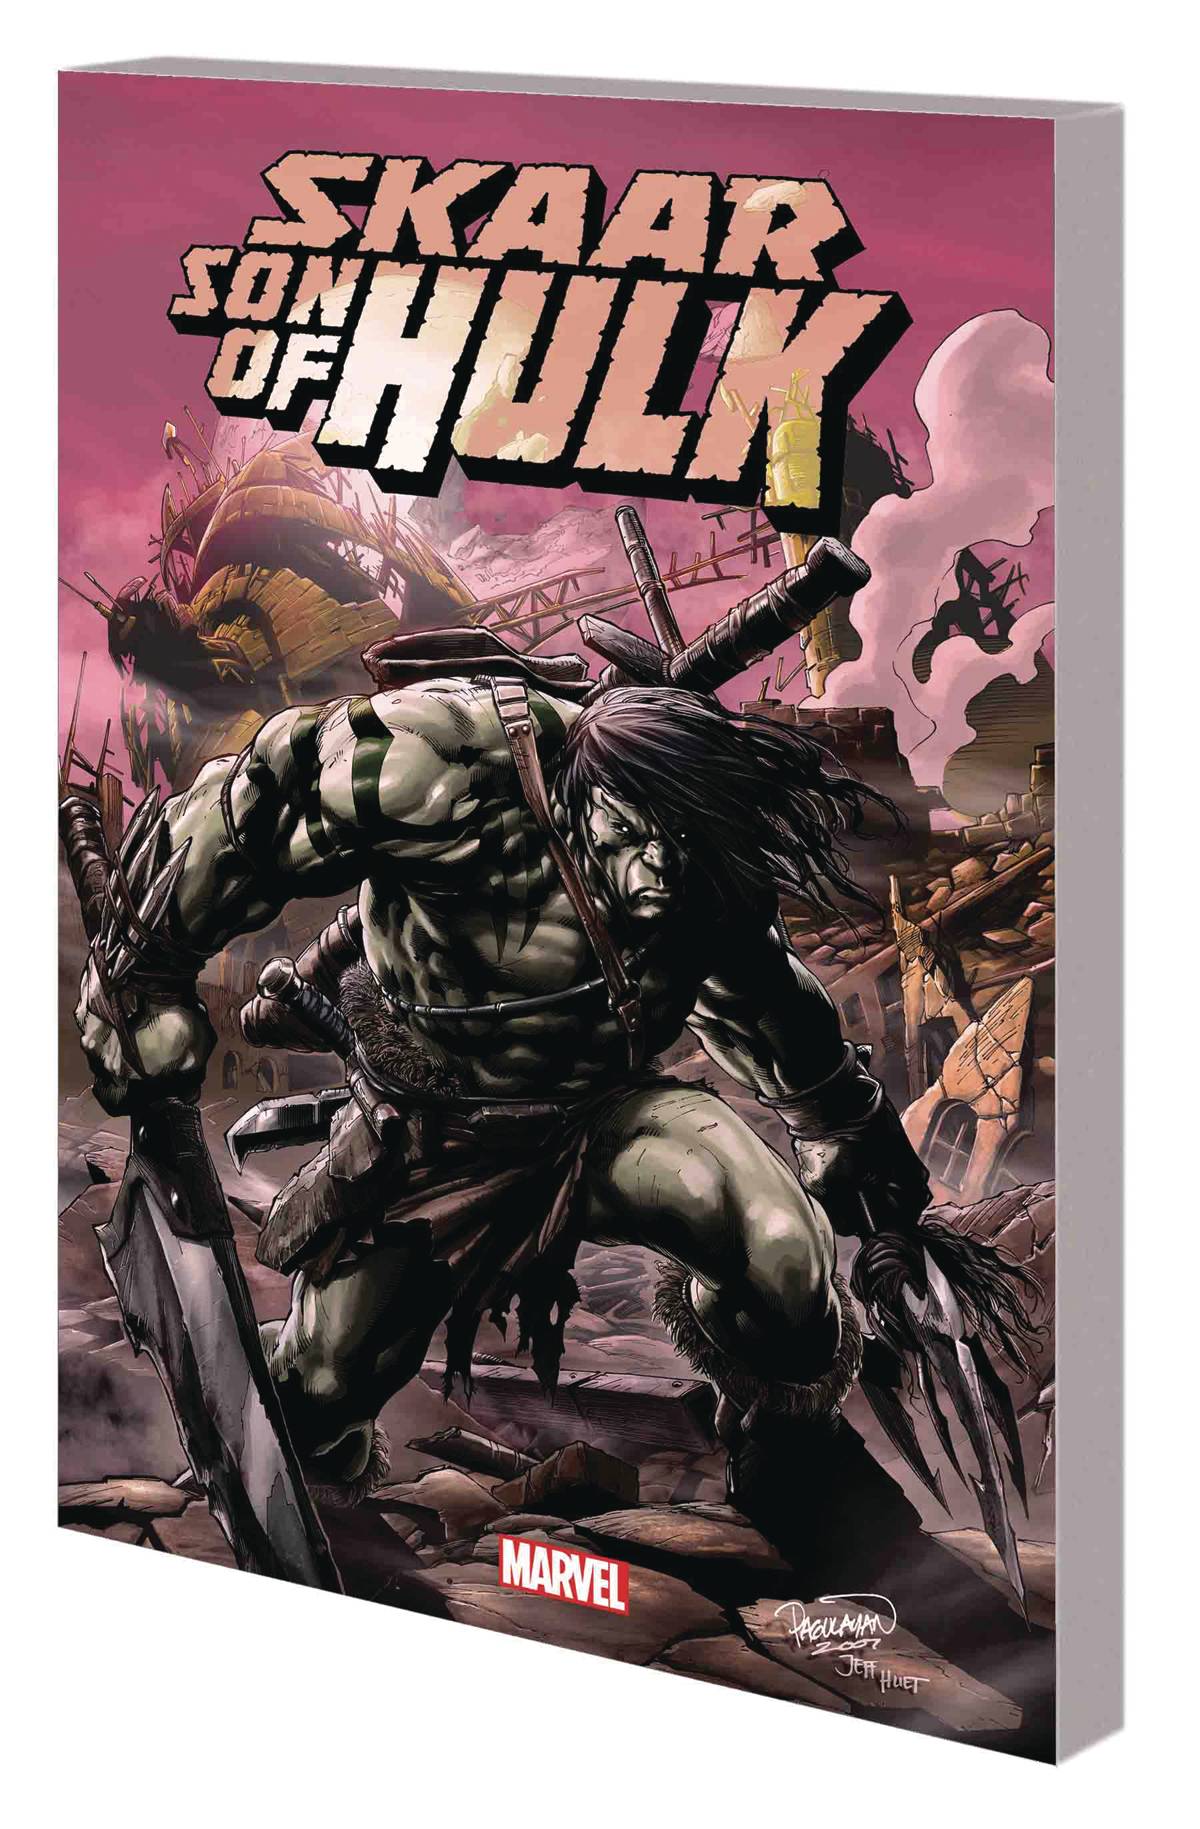 Skaar Son of Hulk Graphic Novel Complete Collection